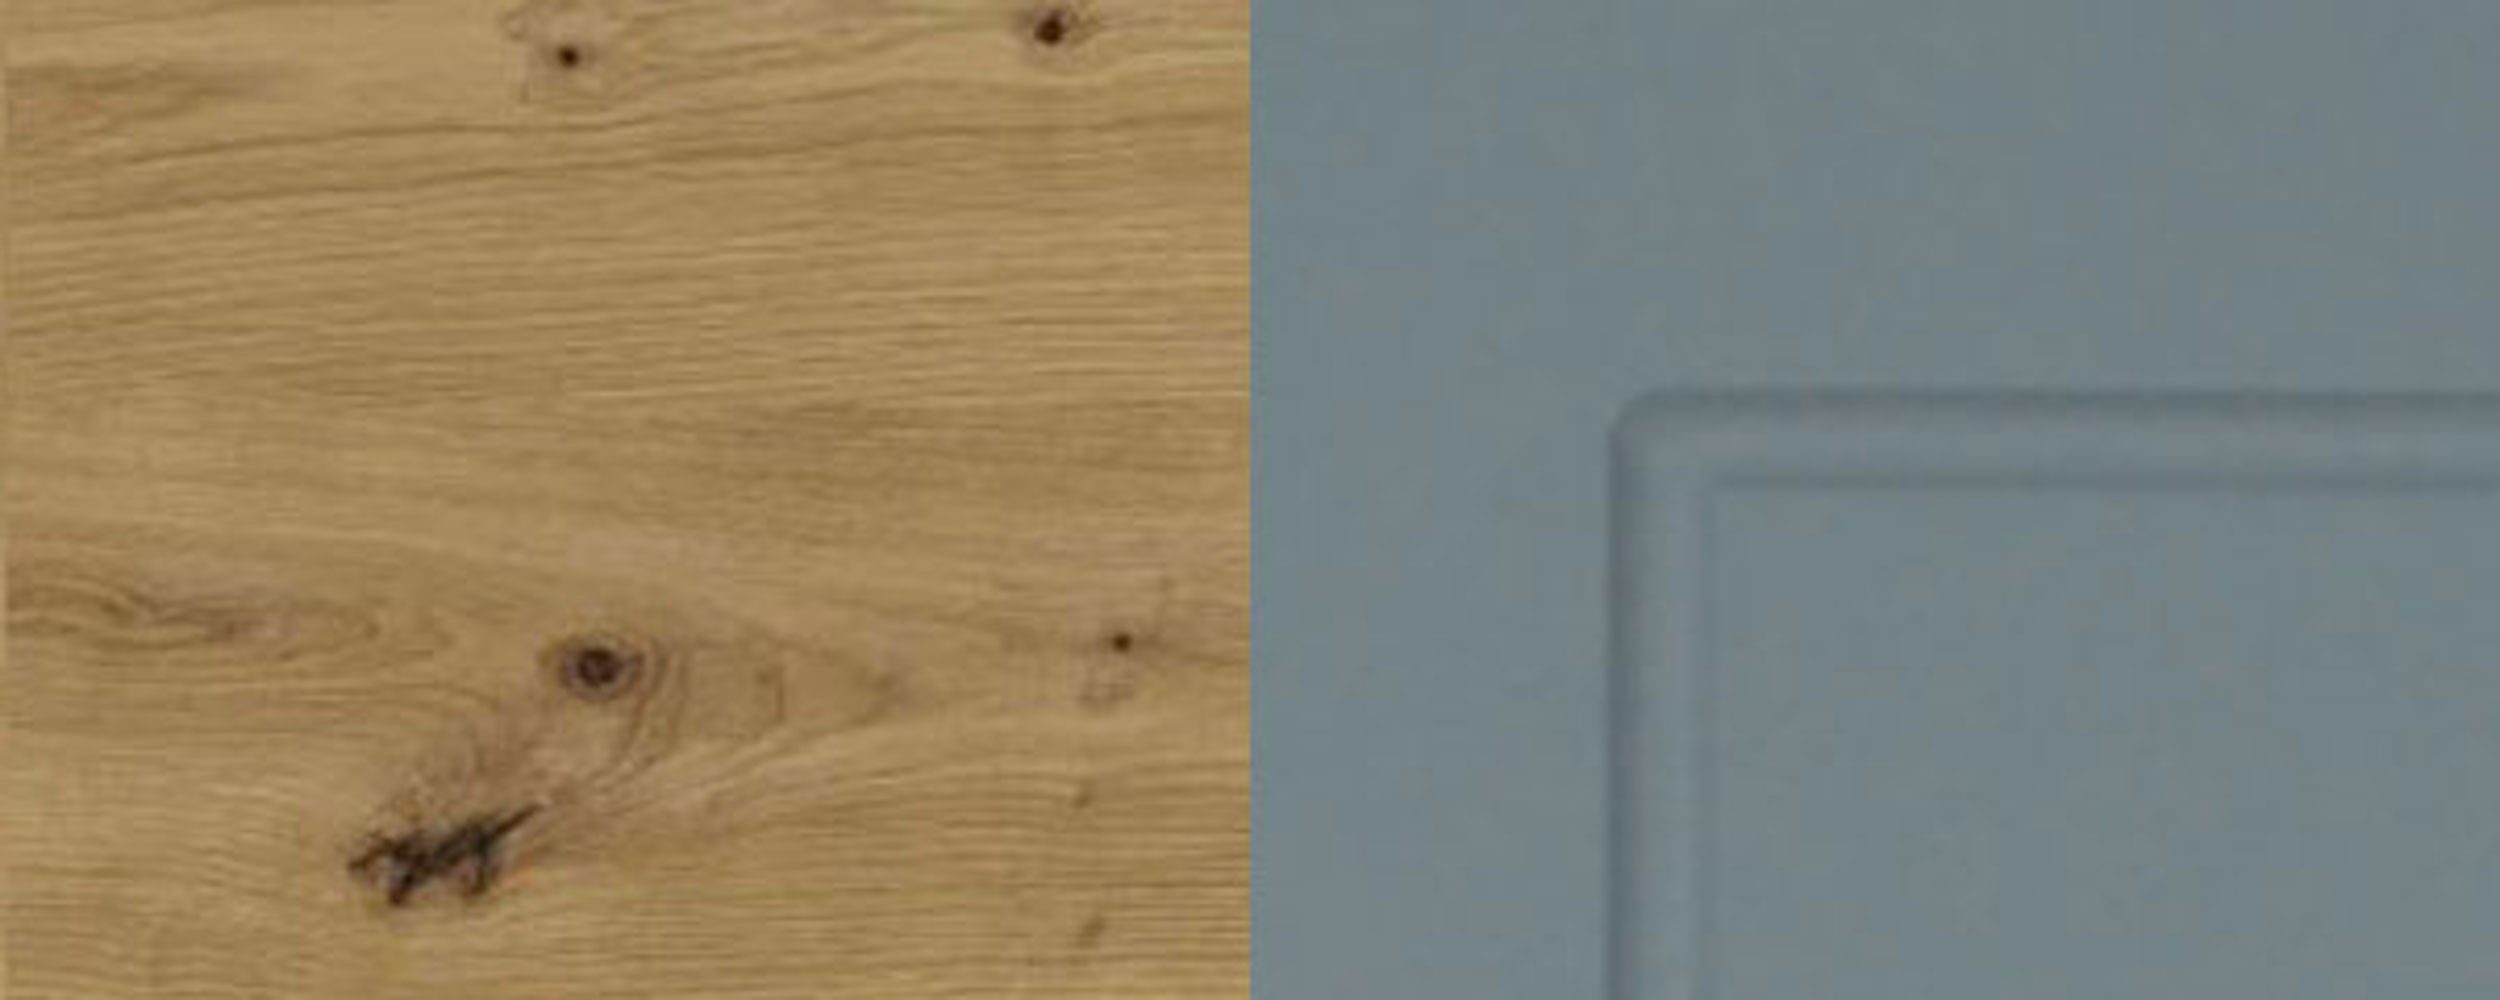 Korpusfarbe Klapptür Feldmann-Wohnen (Milchglaseinsatz) Klapphängeschrank wählbar 1 60cm & matt Front- (Kvantum) mint Kvantum